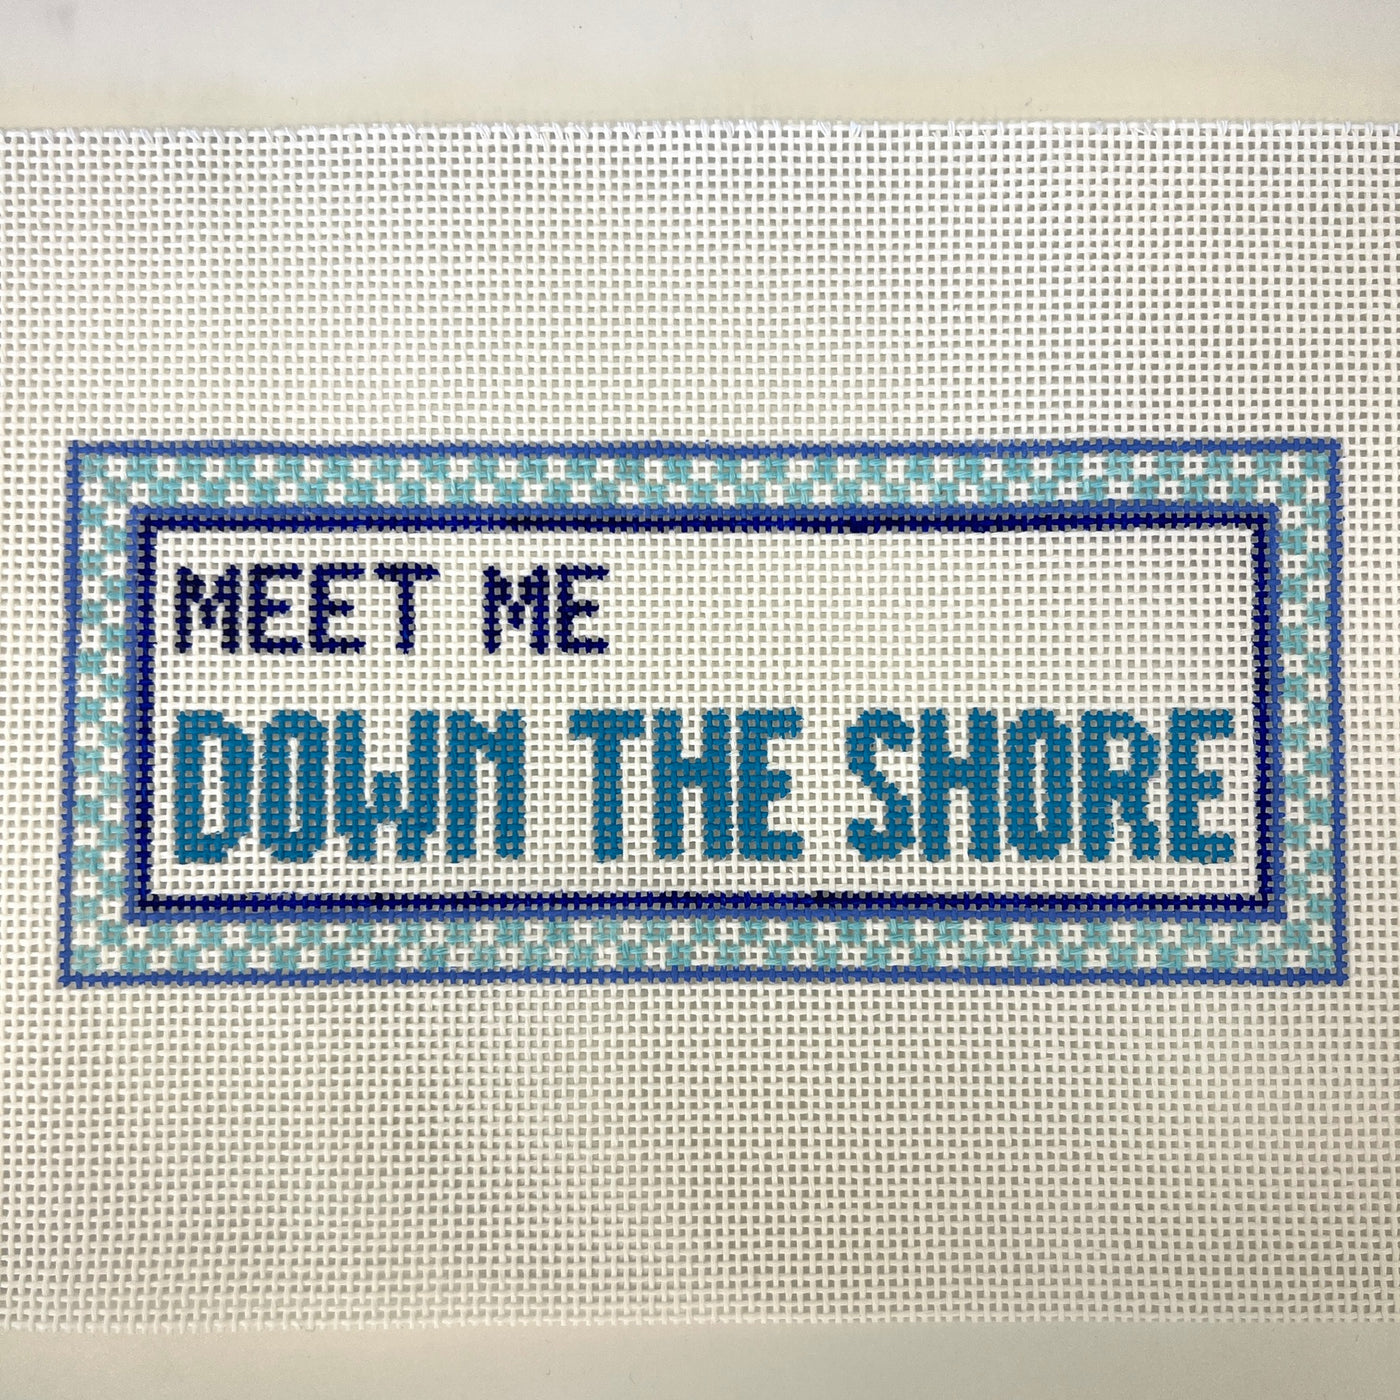 Meet Me Down the Shore